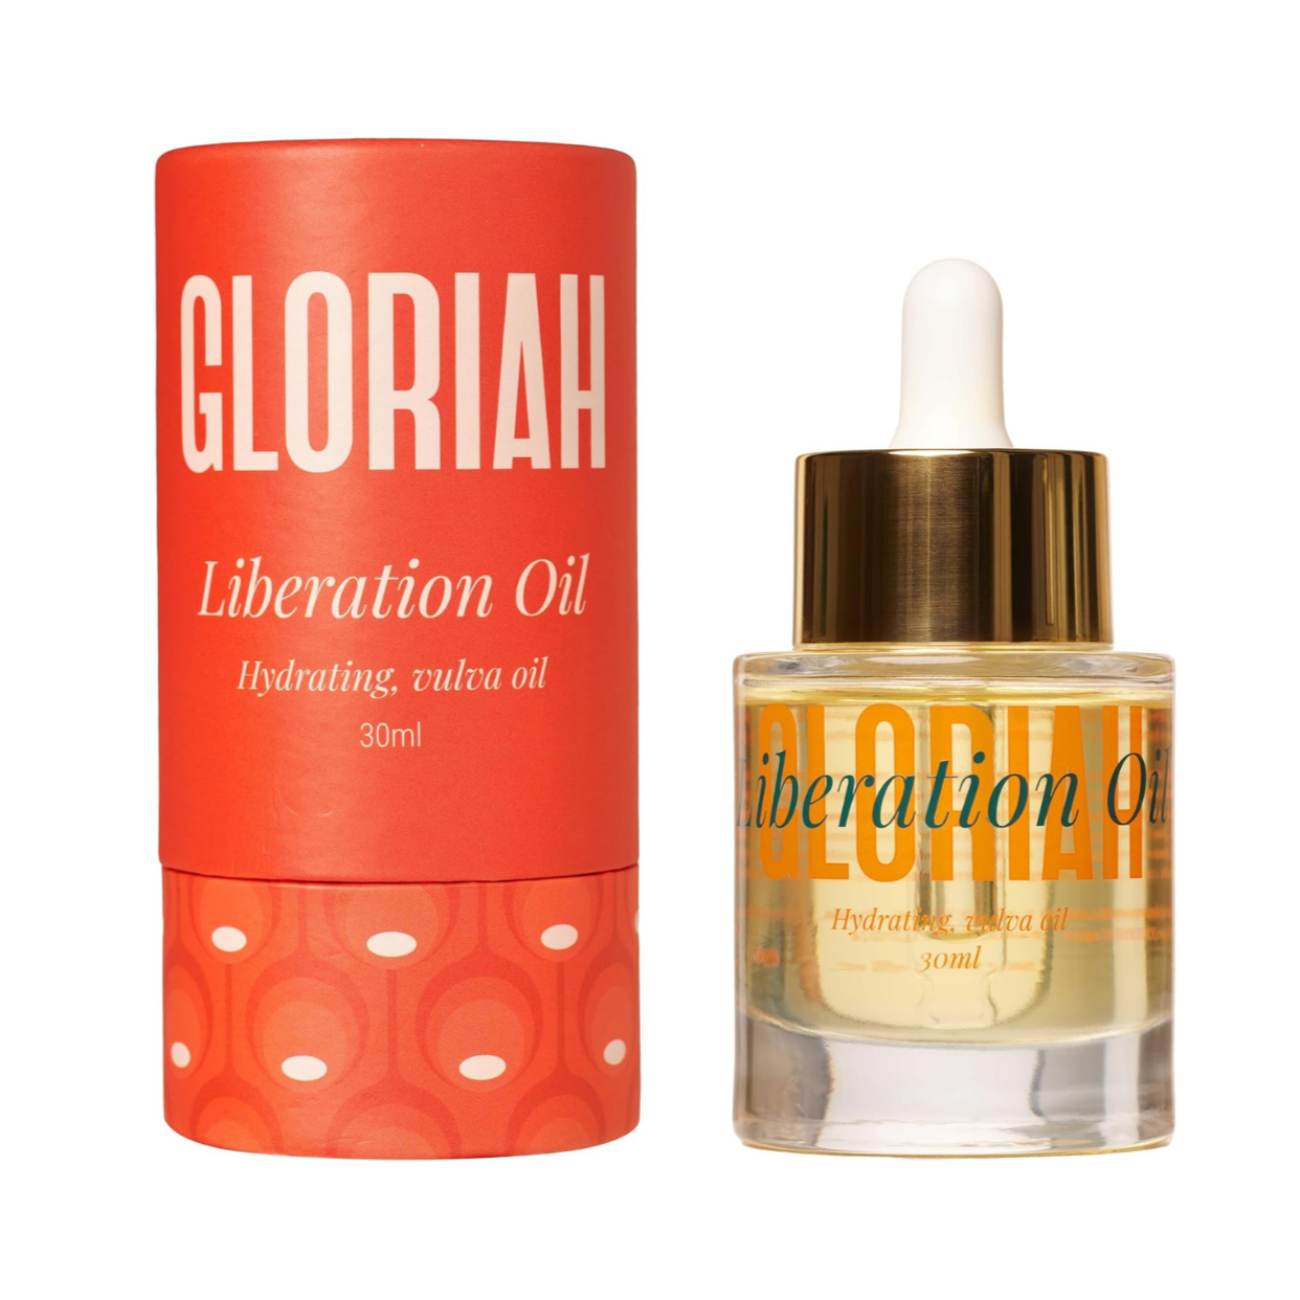 Gloriah Liberation Intimate Oil 30ml